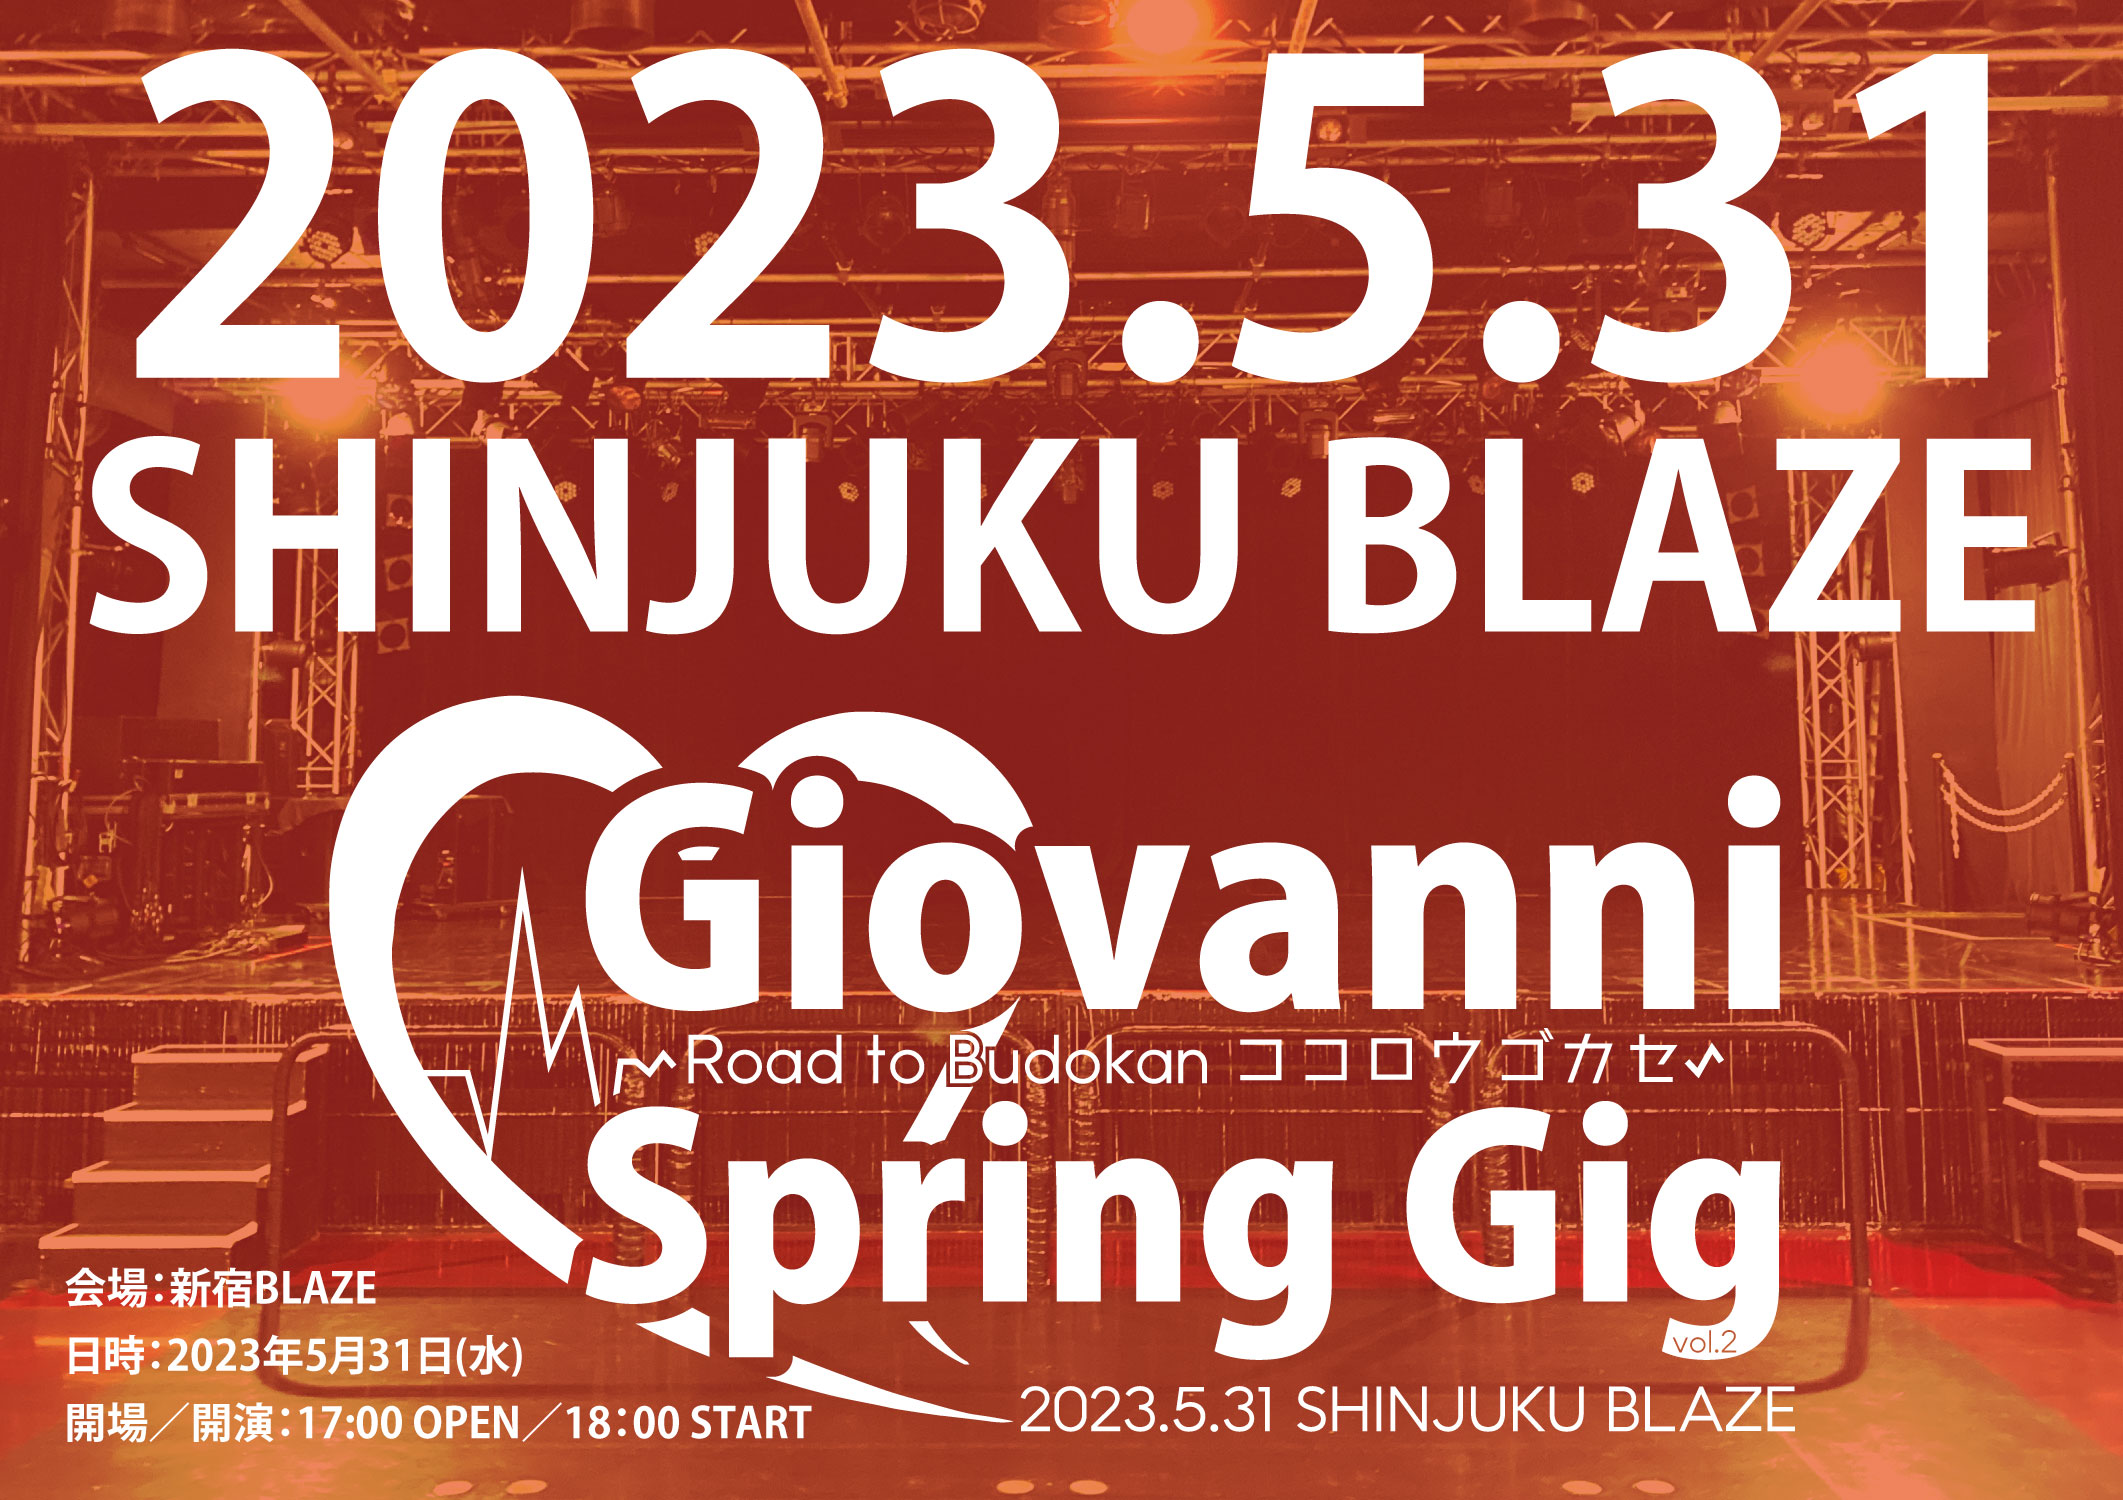 Giovanni Spring Gig vol.2~Road to Budokan ココロウゴカセ~